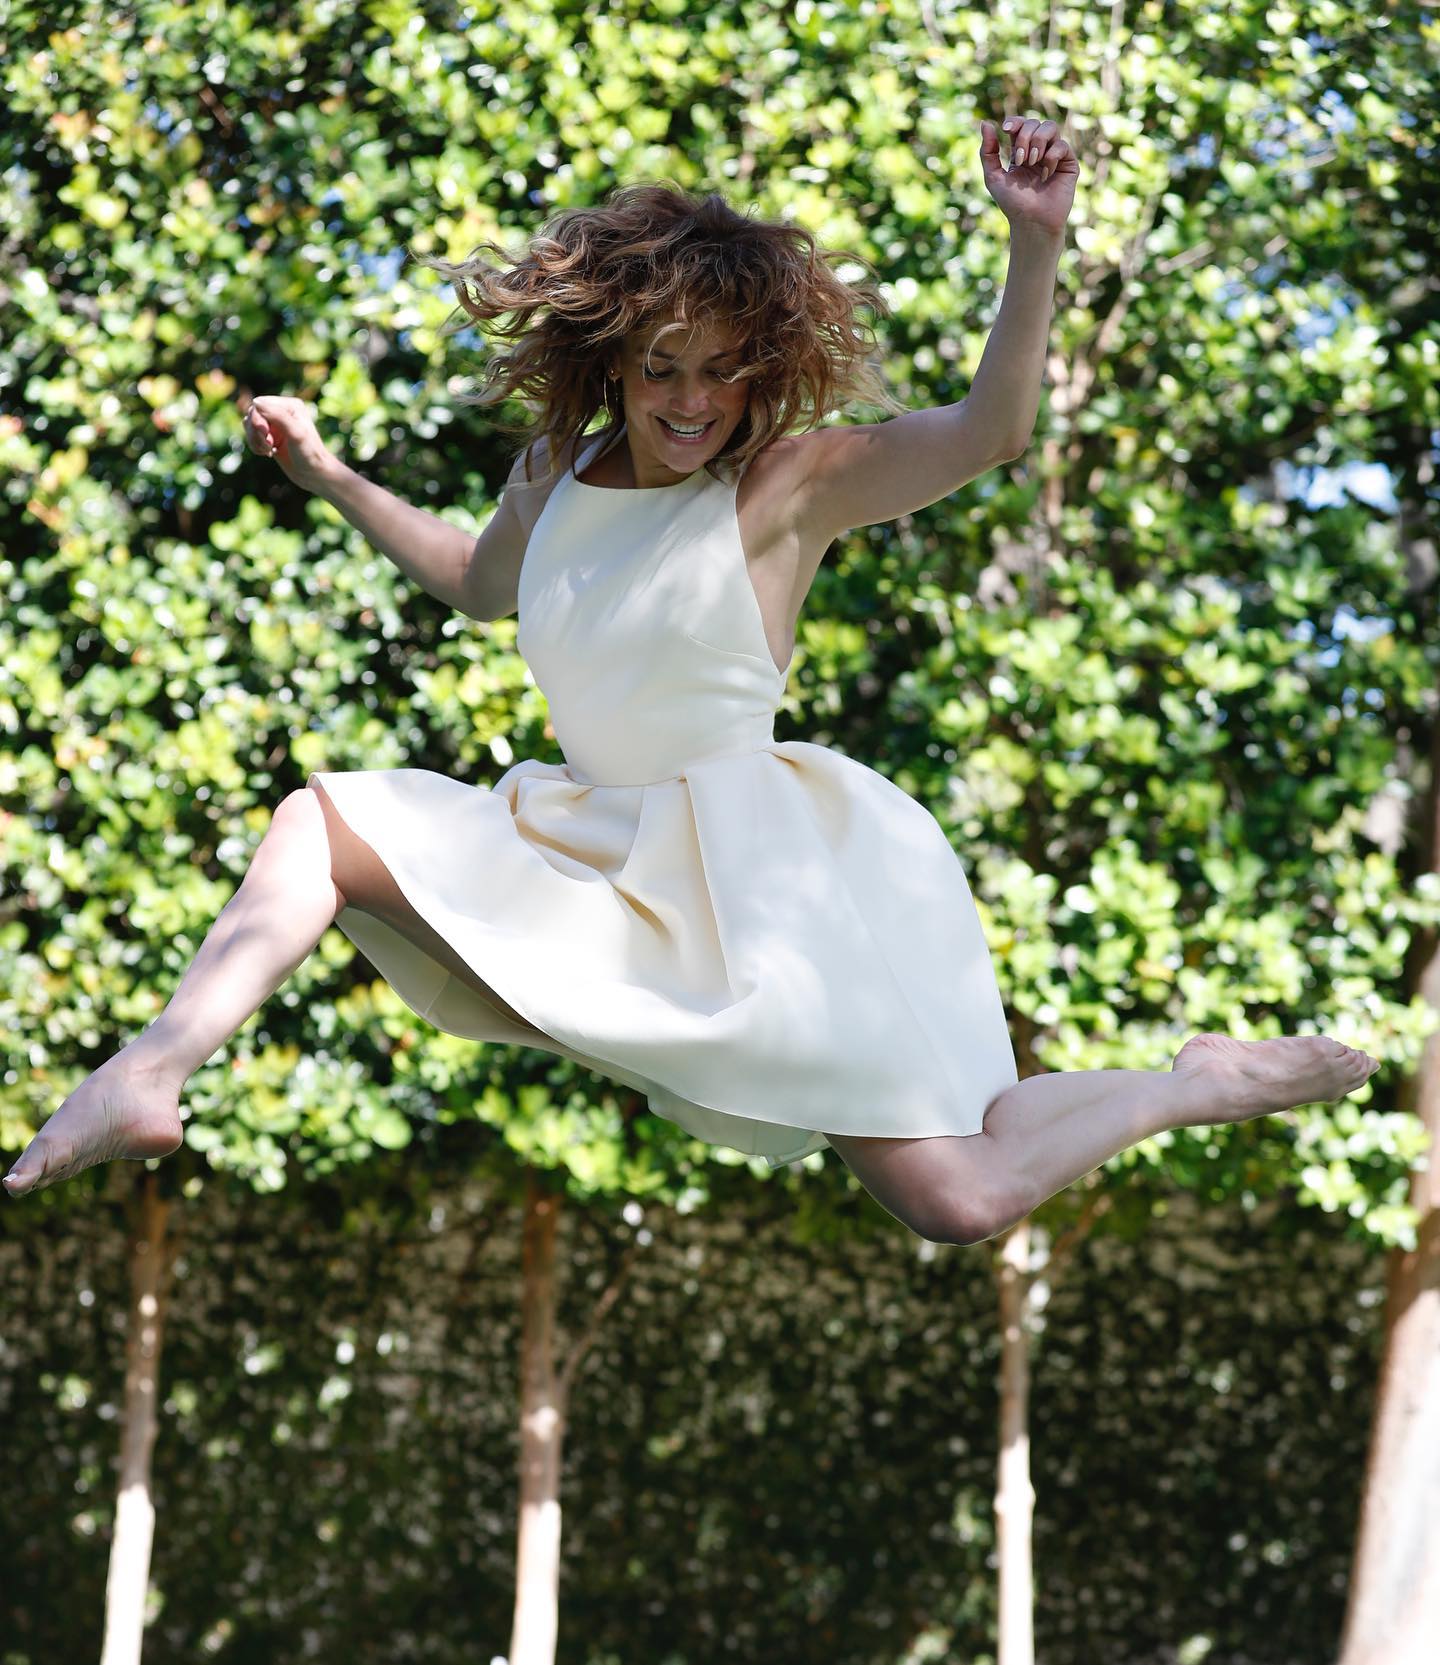 Photos n°4 : Jennifer Lopez is Jumping for Joy!